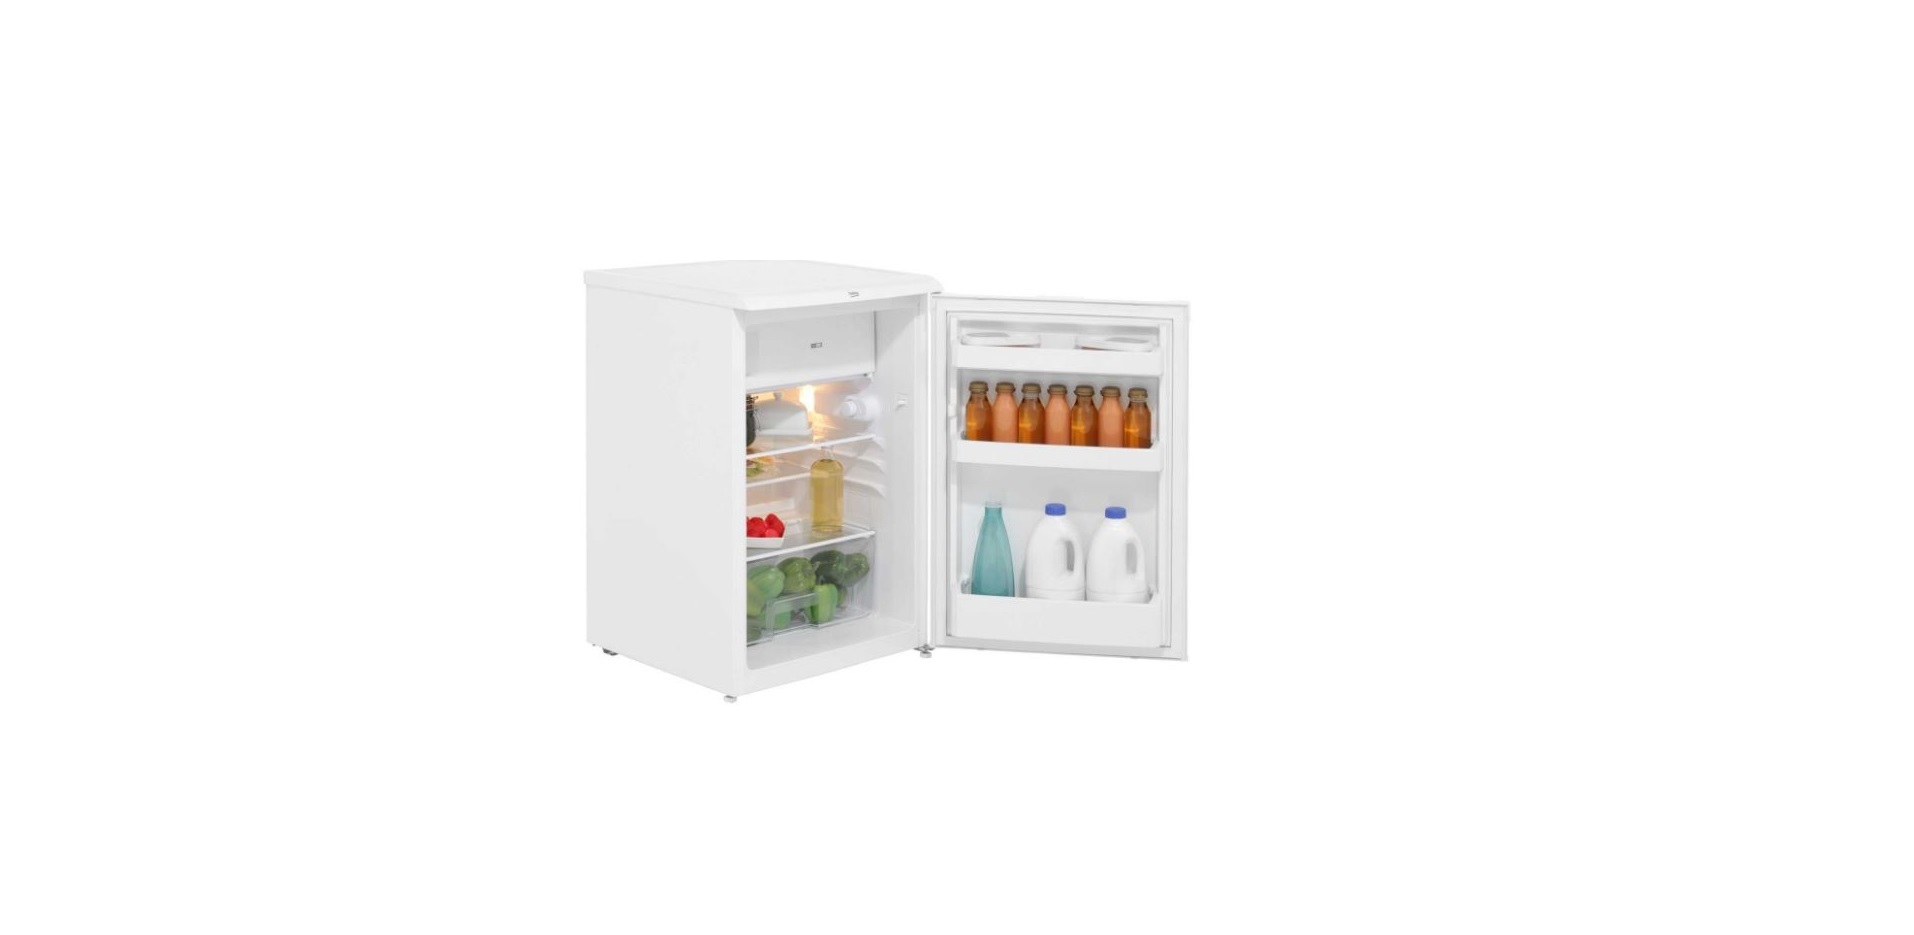 UR584 Series Refrigerator